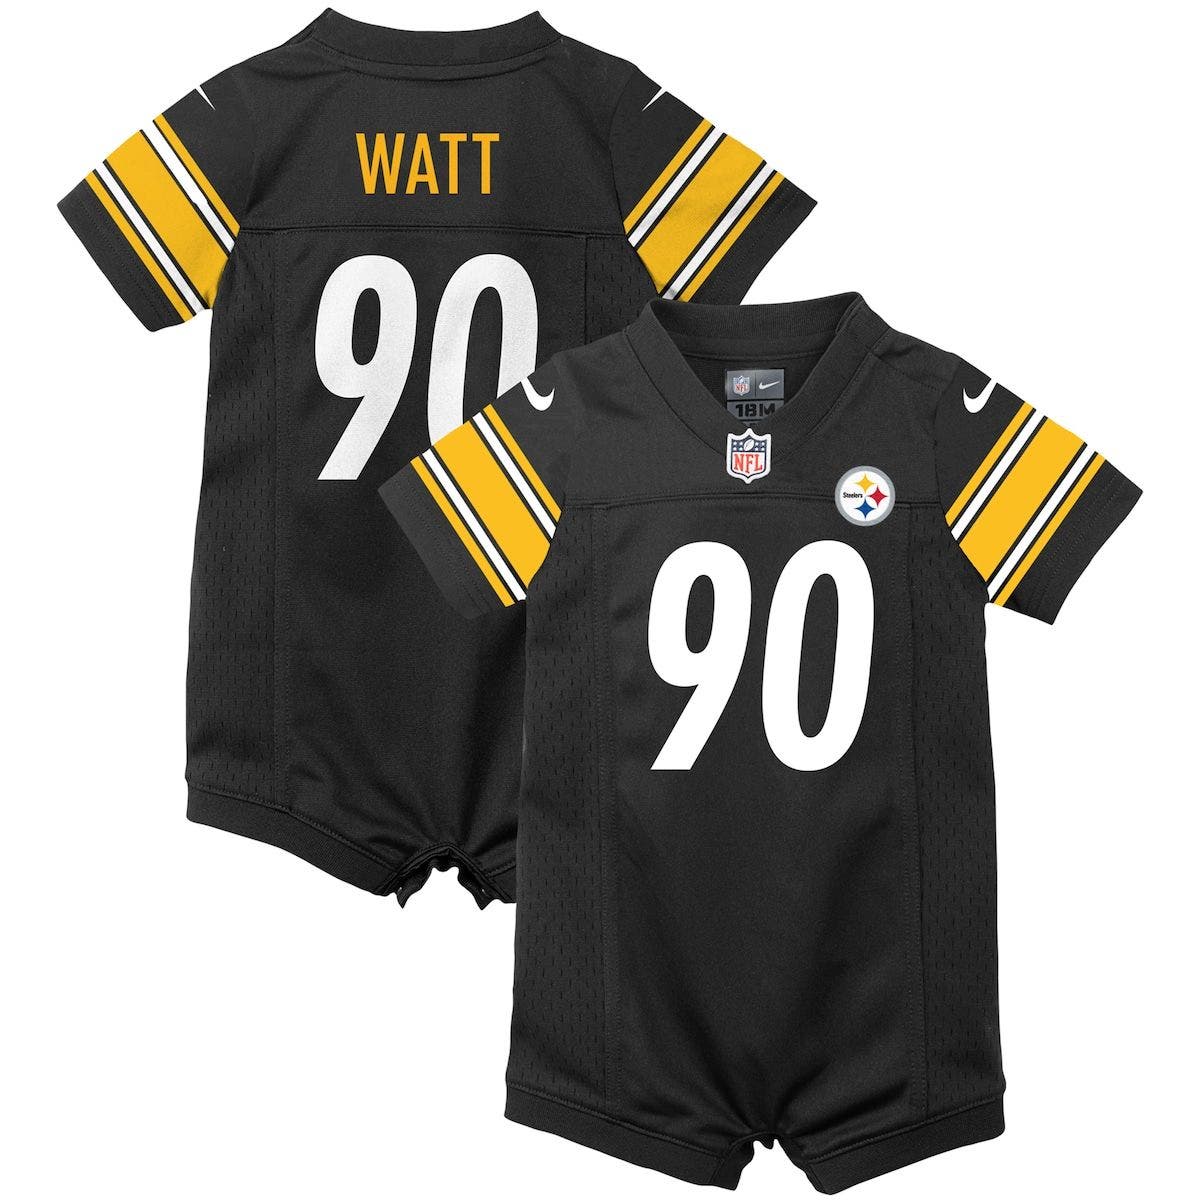 Watt Black Pittsburgh Steelers Game Romper Jersey at Nordstrom Infant T.J Nordstrom Clothing Underwear Rompers 